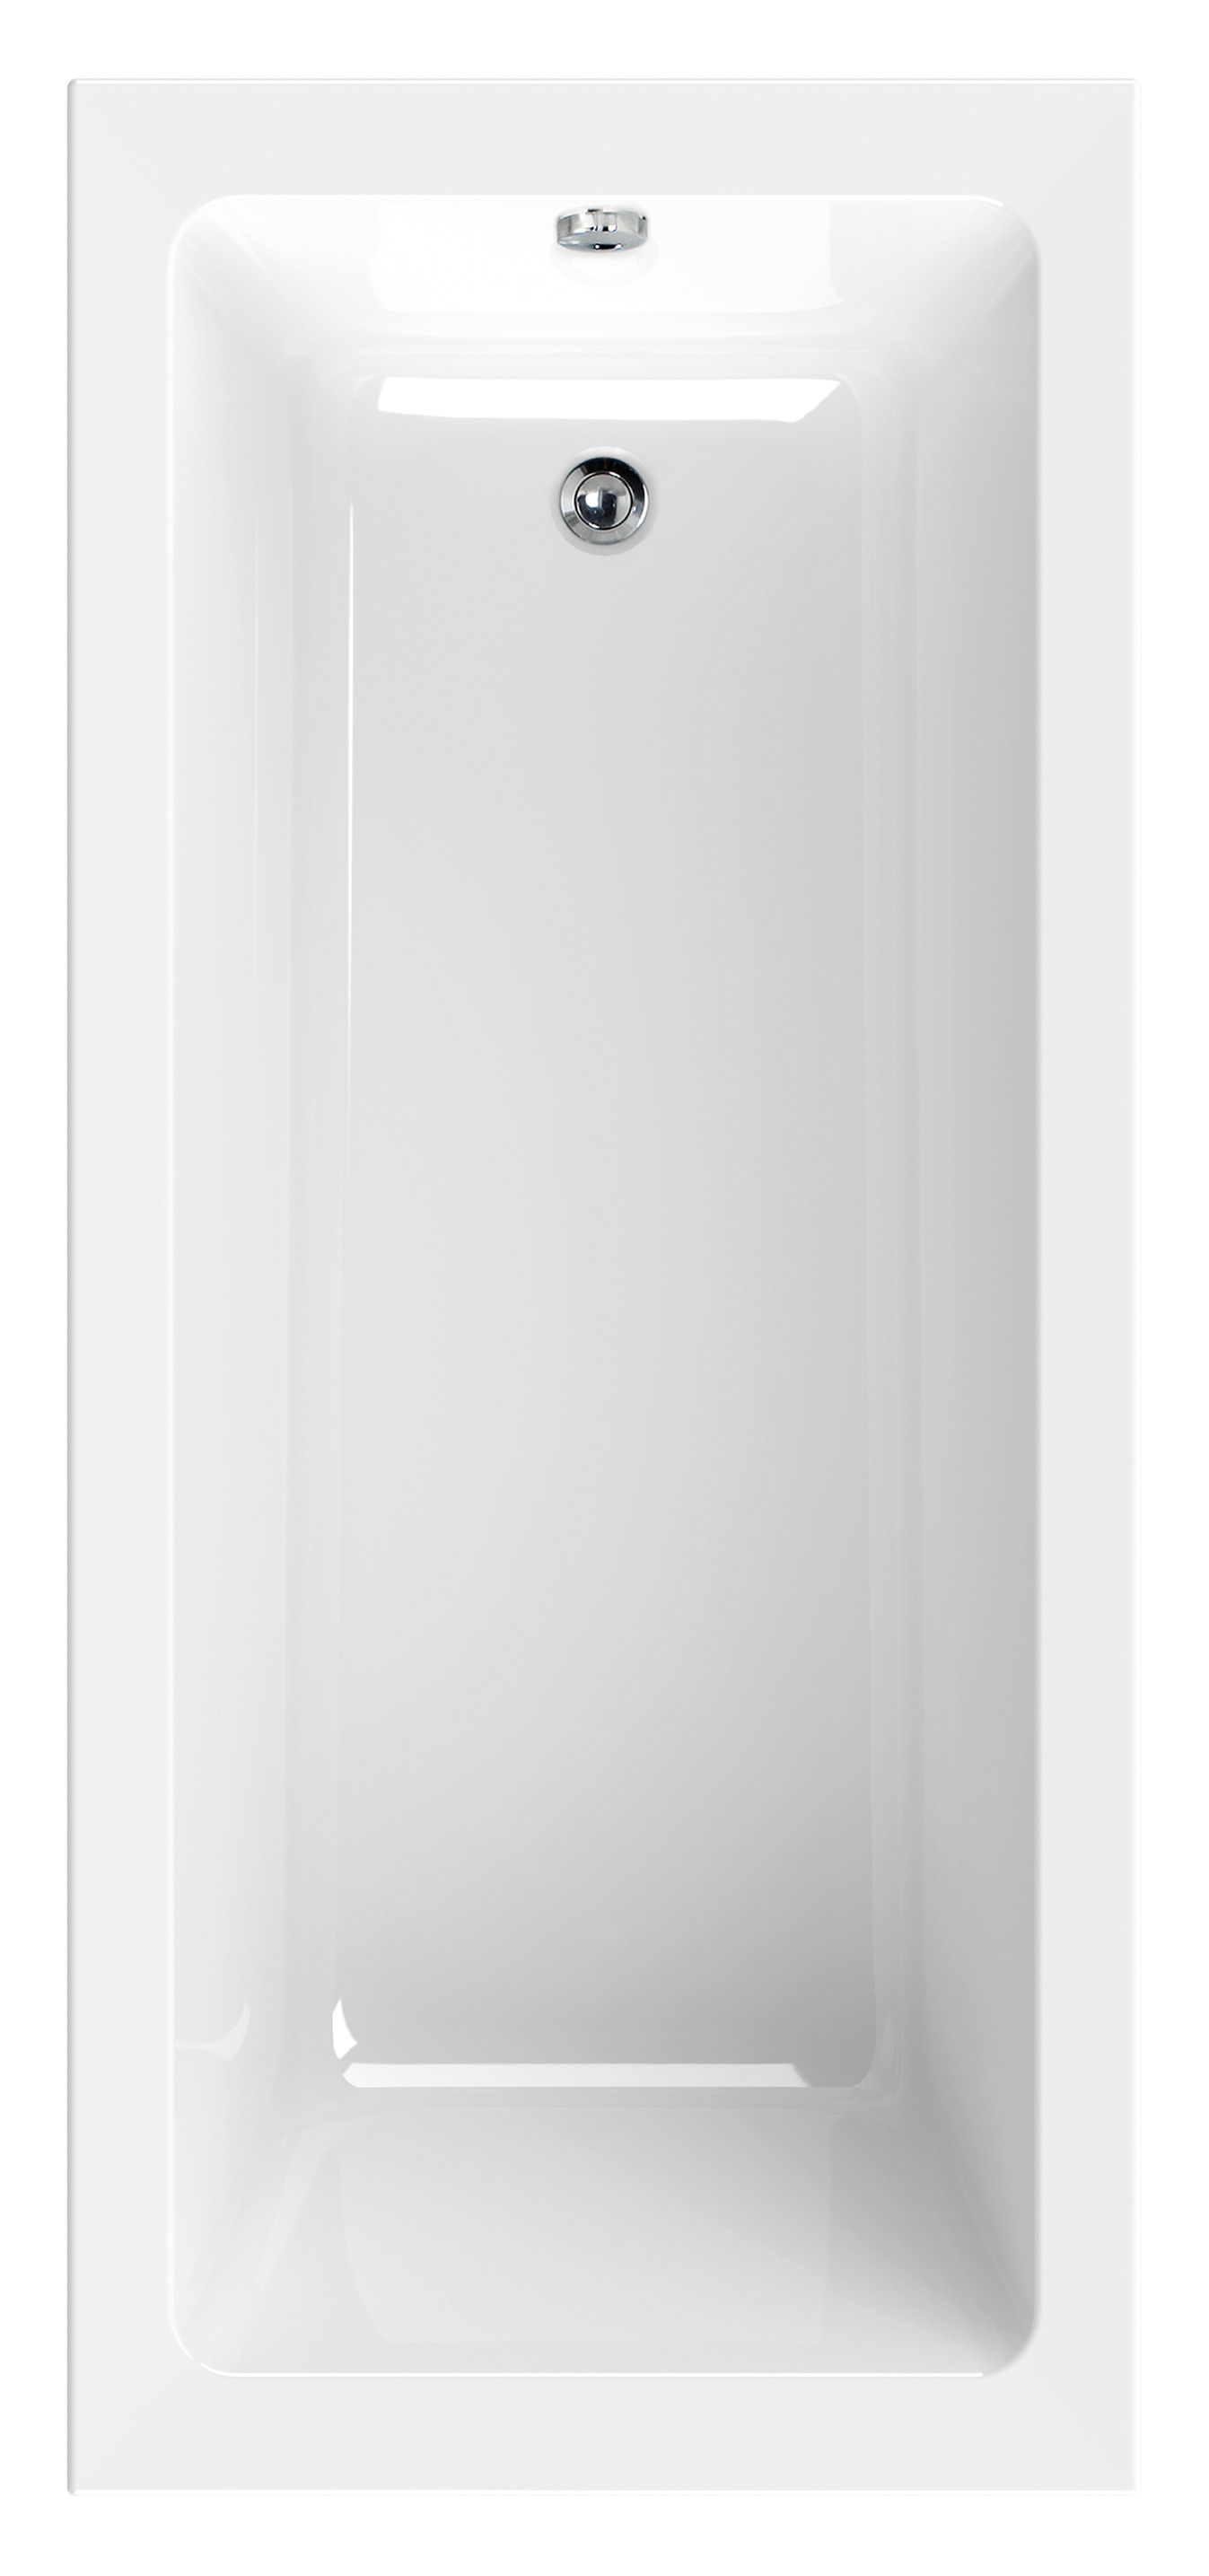 Acryl-Wanne Modern Square in Weiß, 180 x 80 cm, Körperformbadewanne